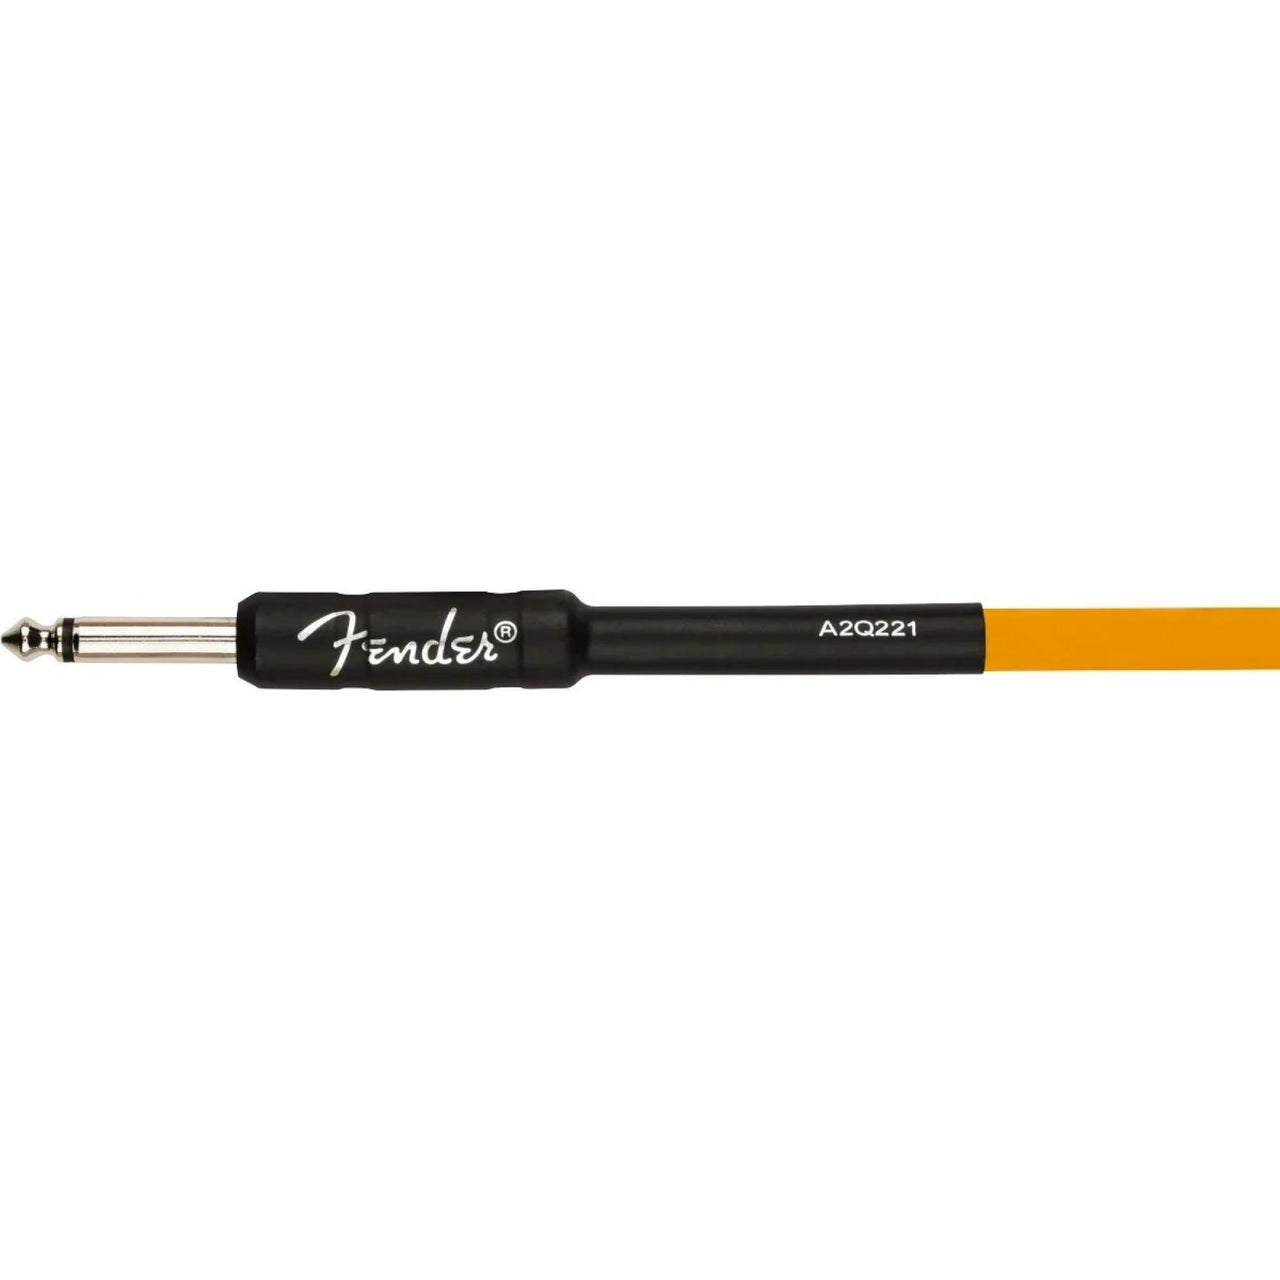 Cable Fender Glow In Dark Cbl Orange 5.5mts, 0990818113